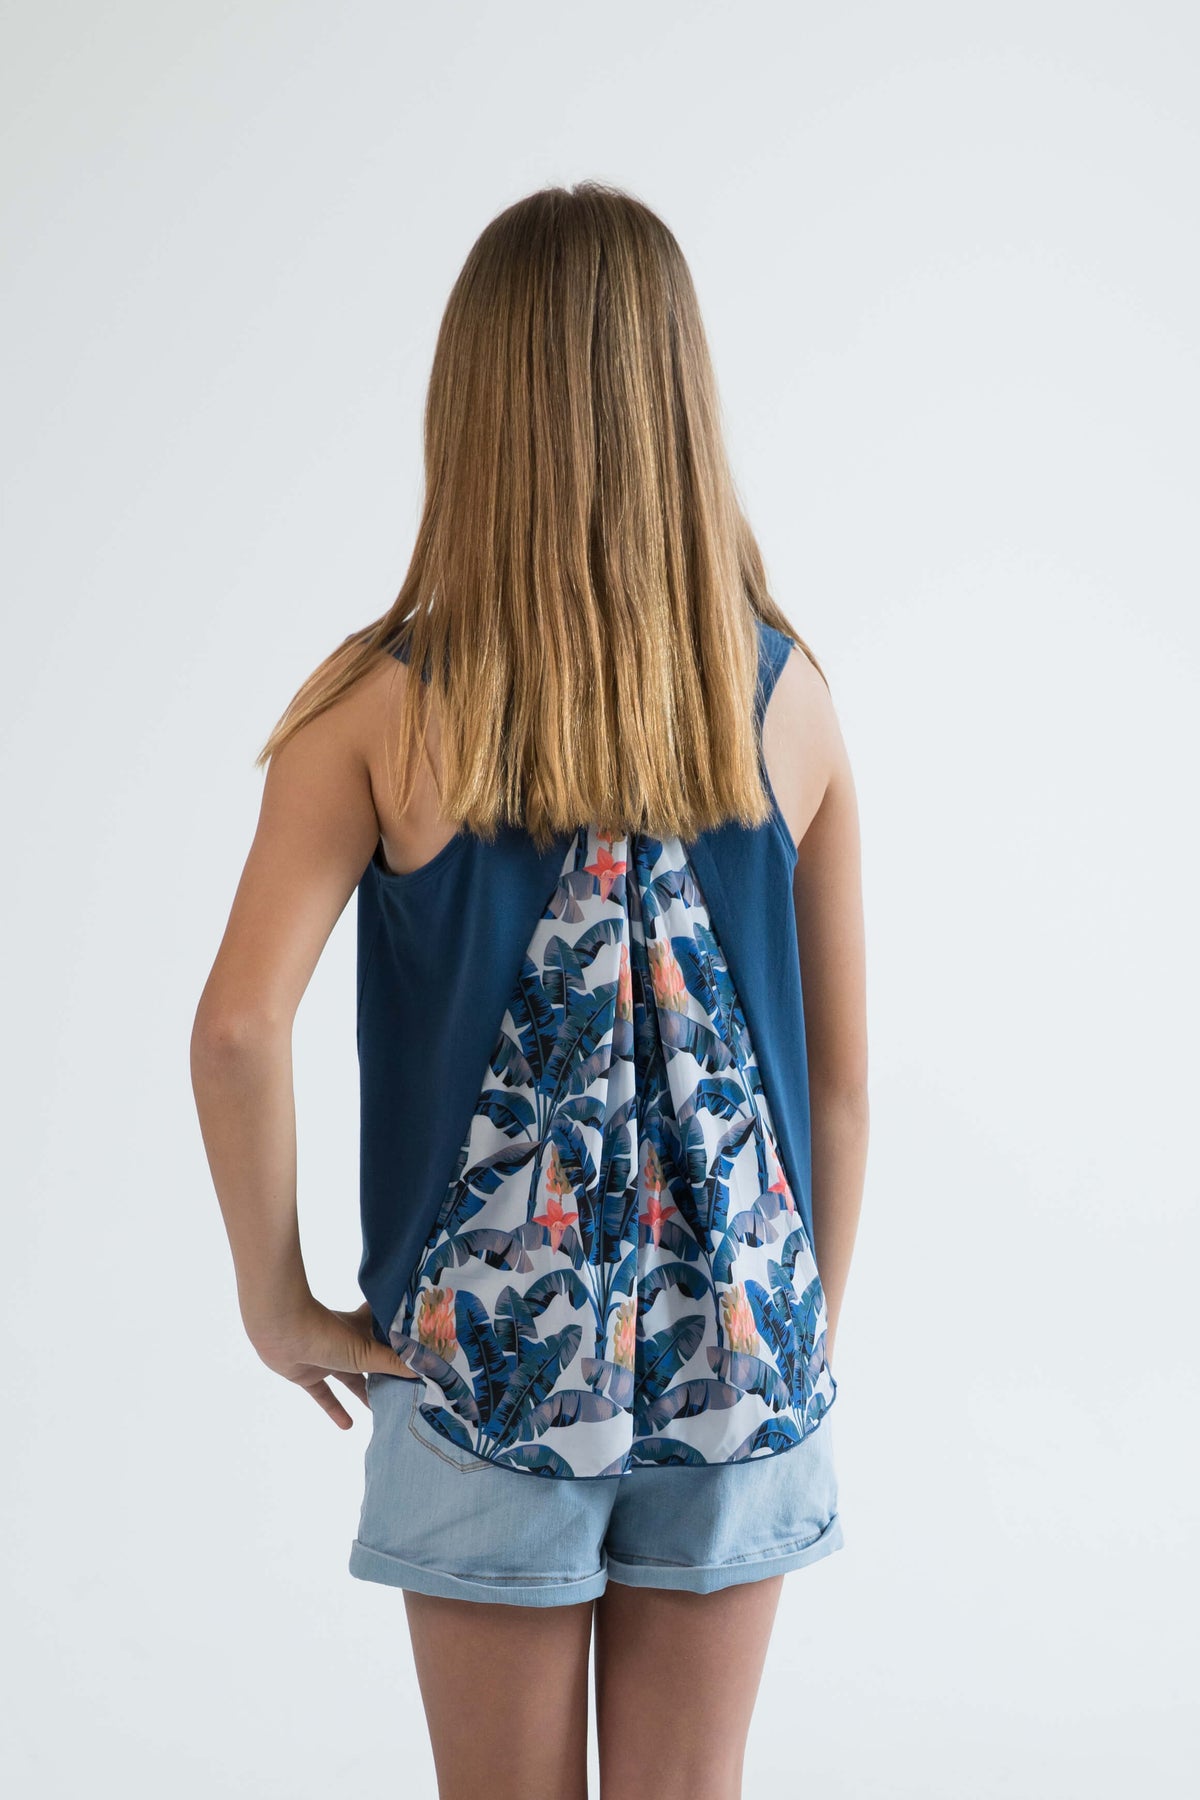 blue teen girls clothing sleeveless singlet top palm tree print by Love Haidee Australia back